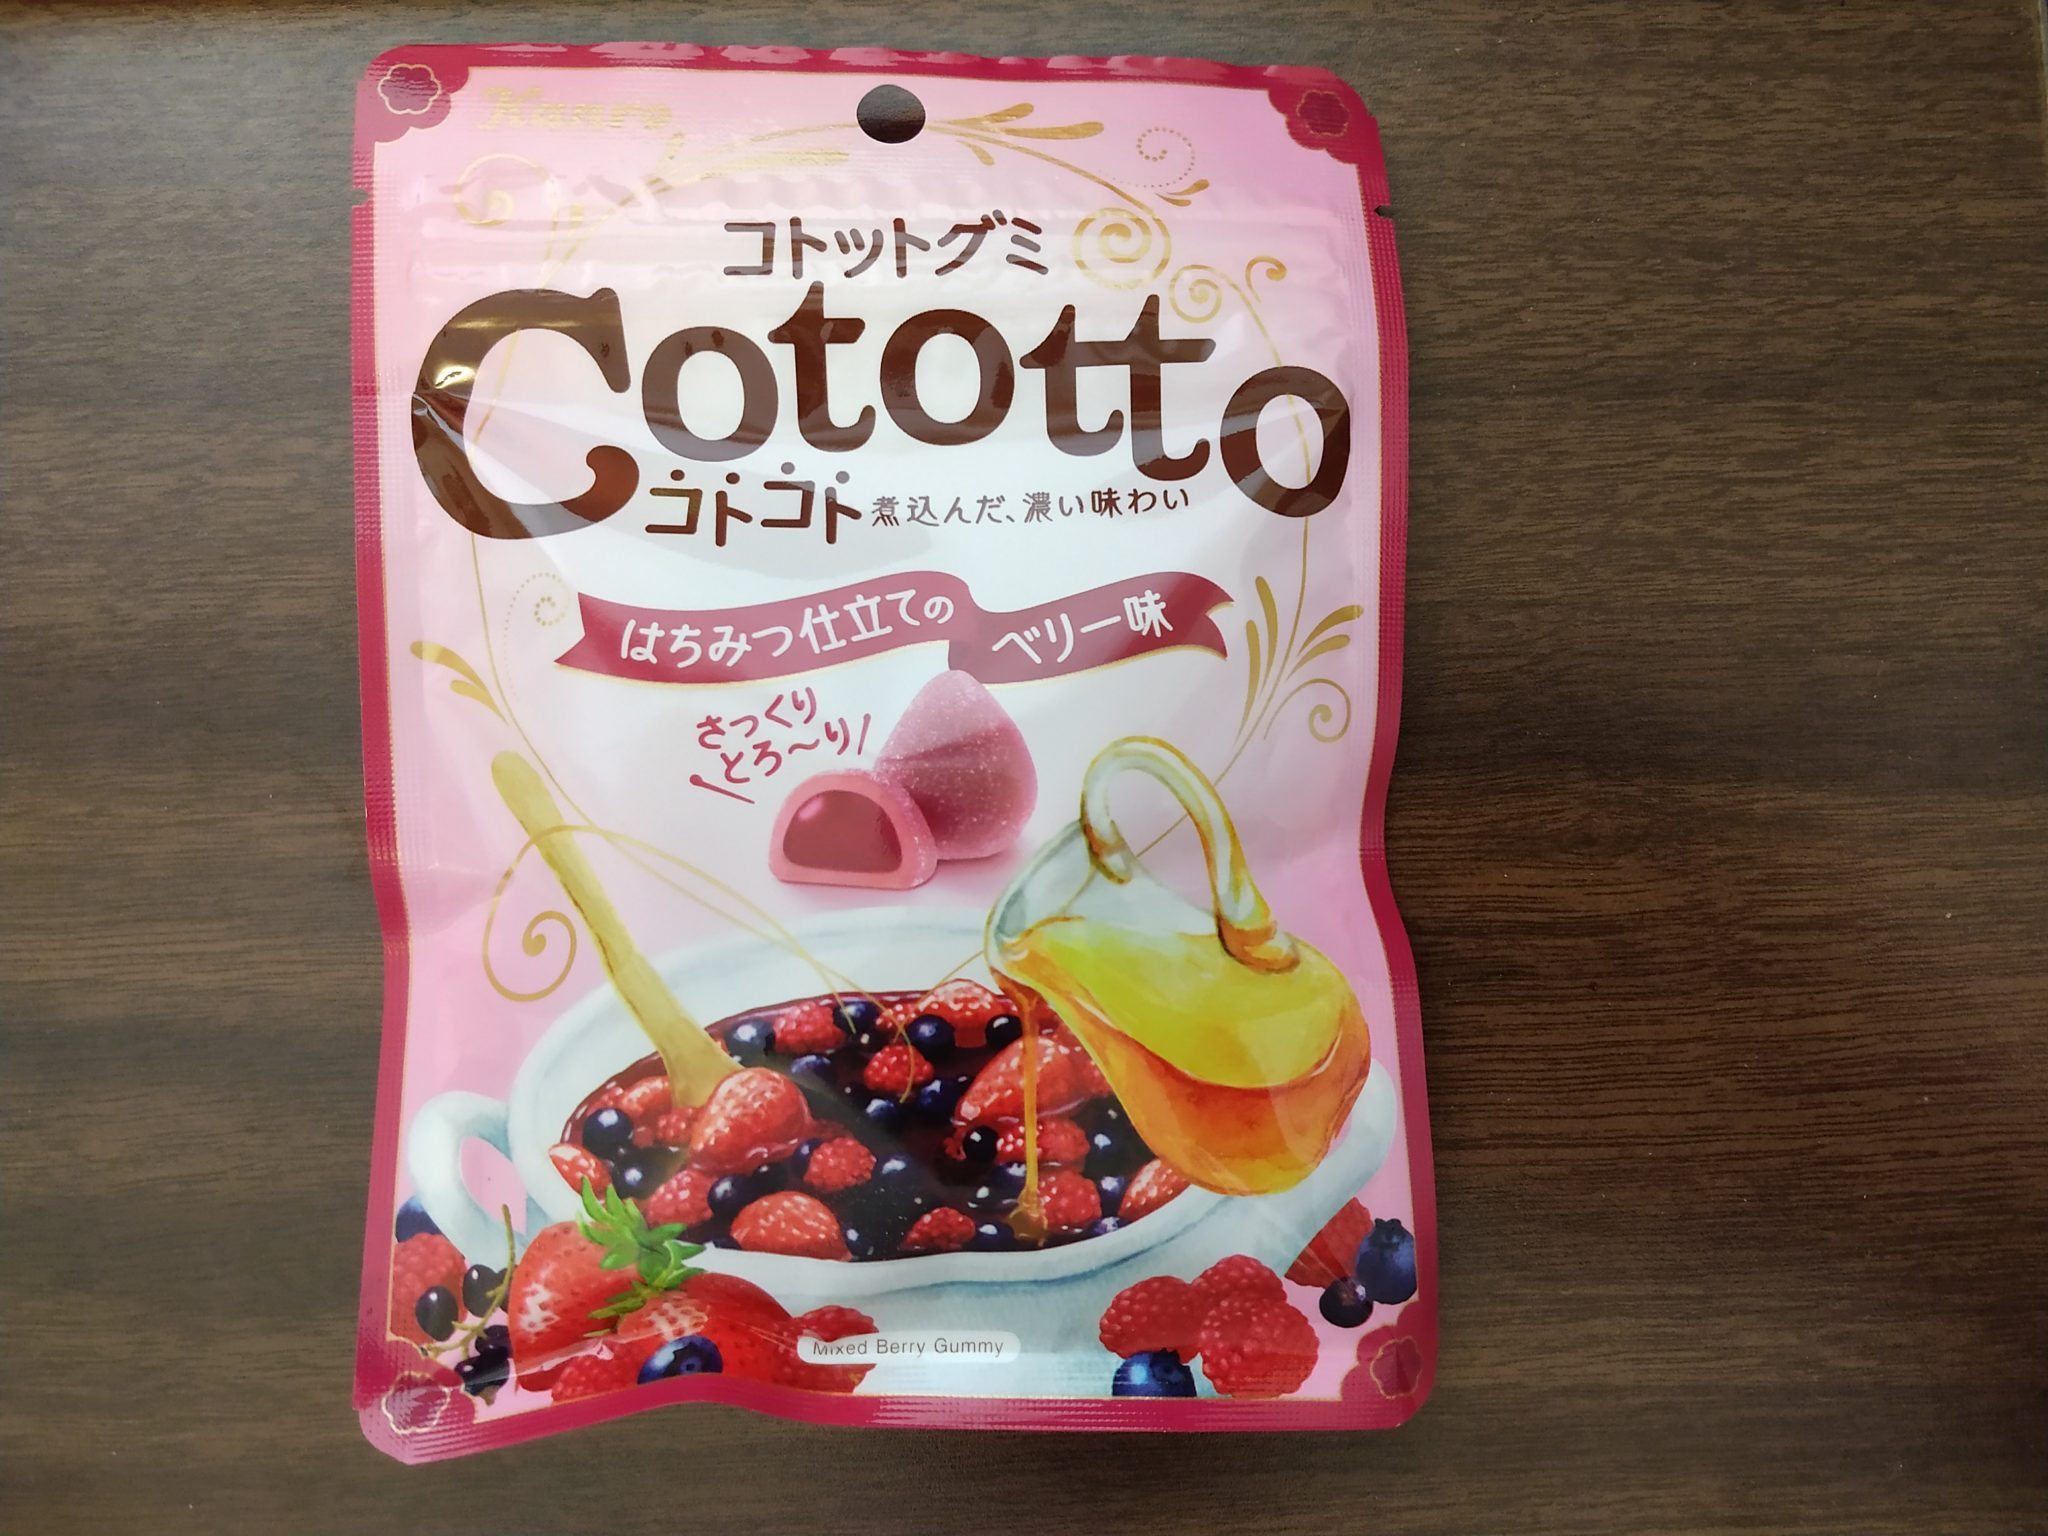 Cototto Honey Mixed Berry Gummies